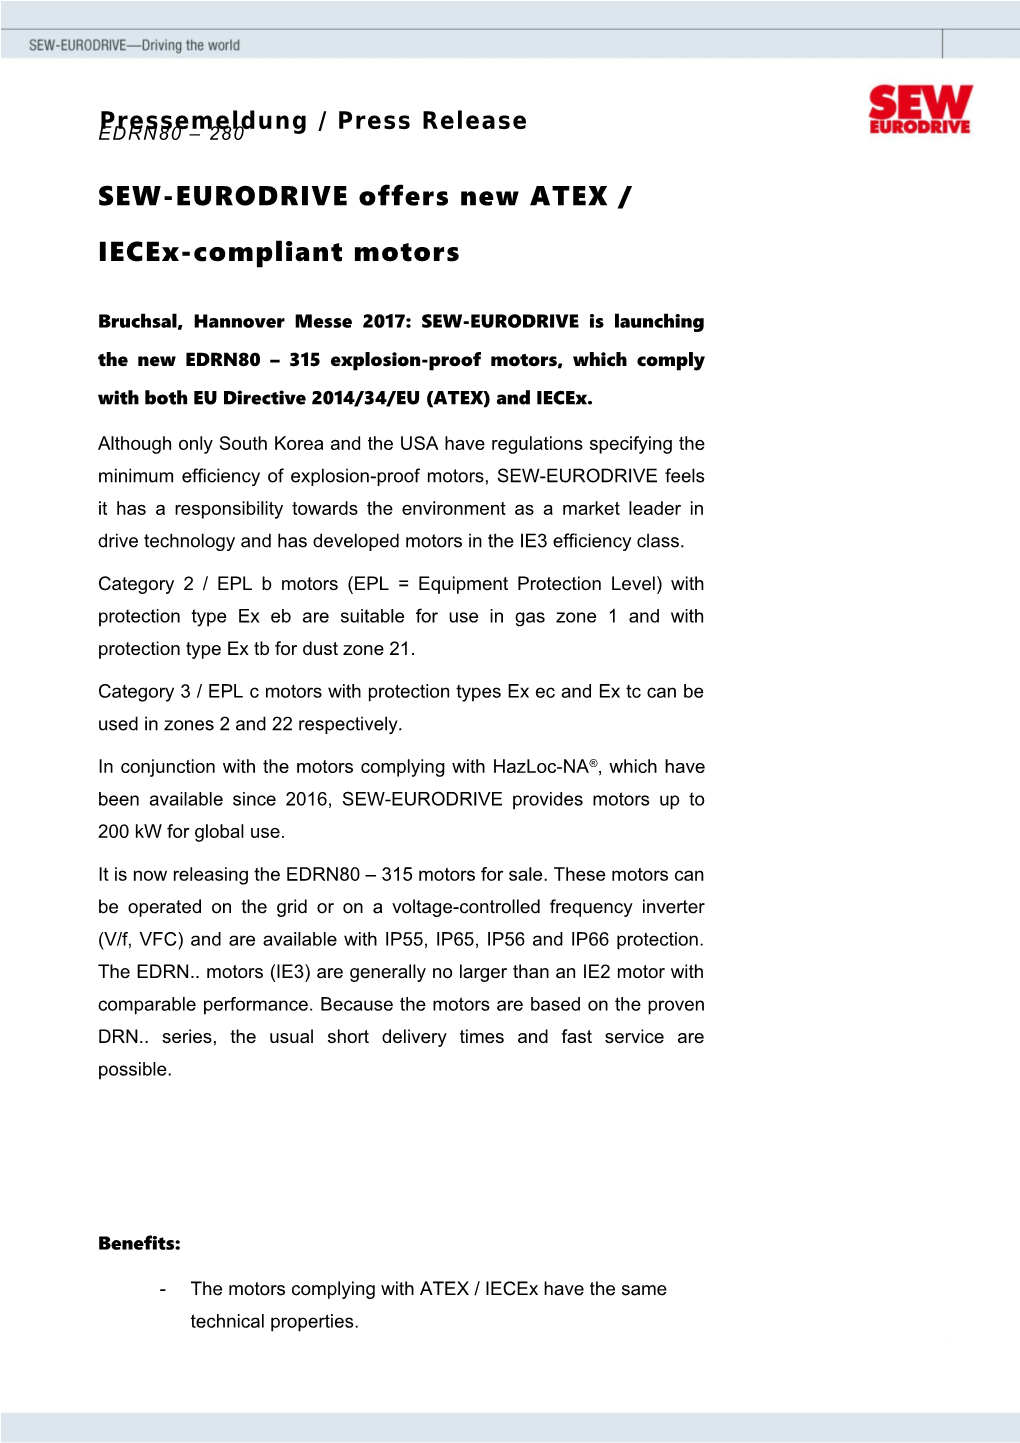 SEW-EURODRIVE Offers New ATEX / Iecex-Compliant Motors